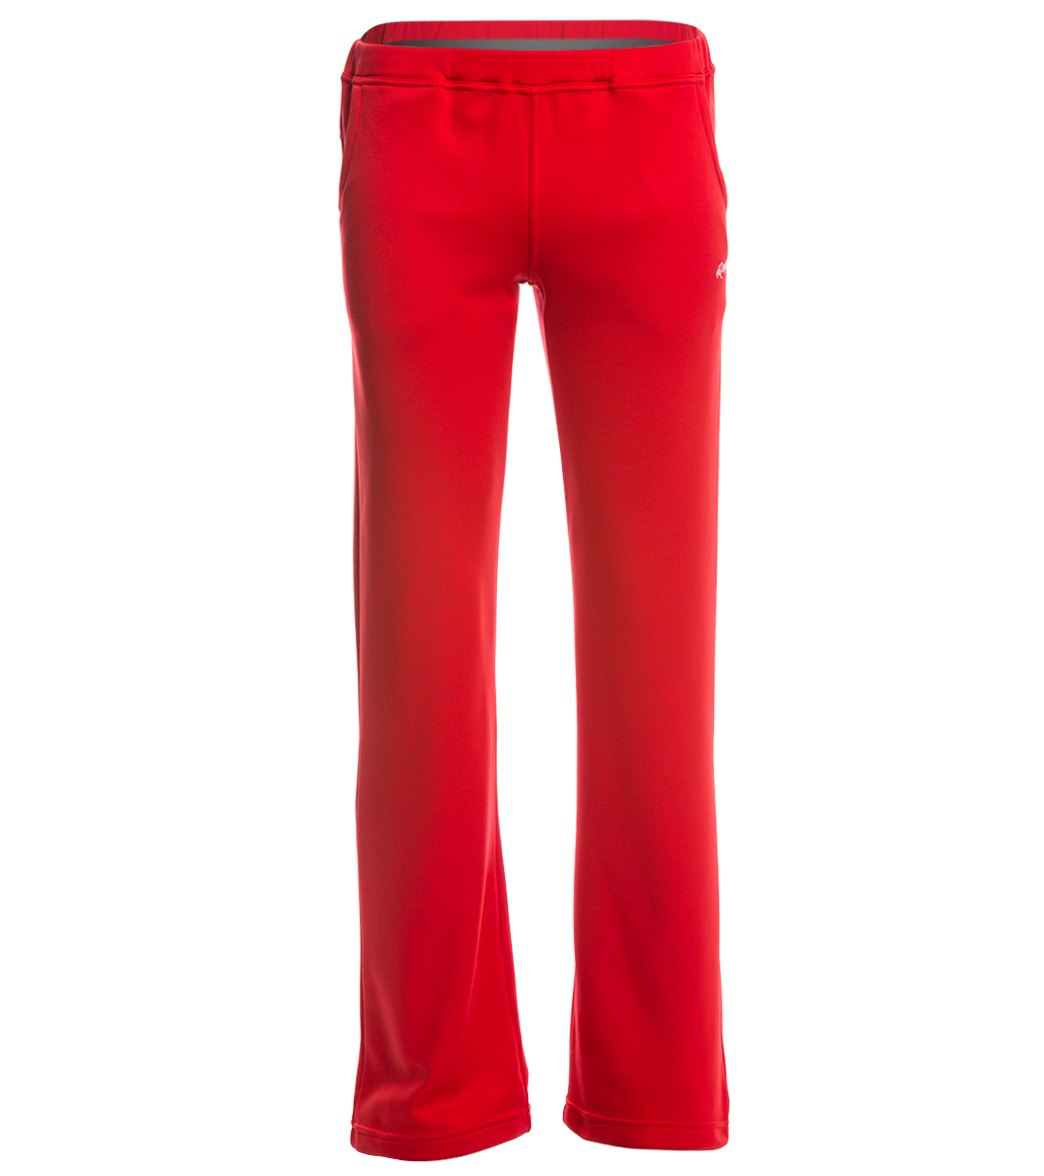 Dolfin Warm Up Pants - Red Xxlarge Size Xxl - Swimoutlet.com